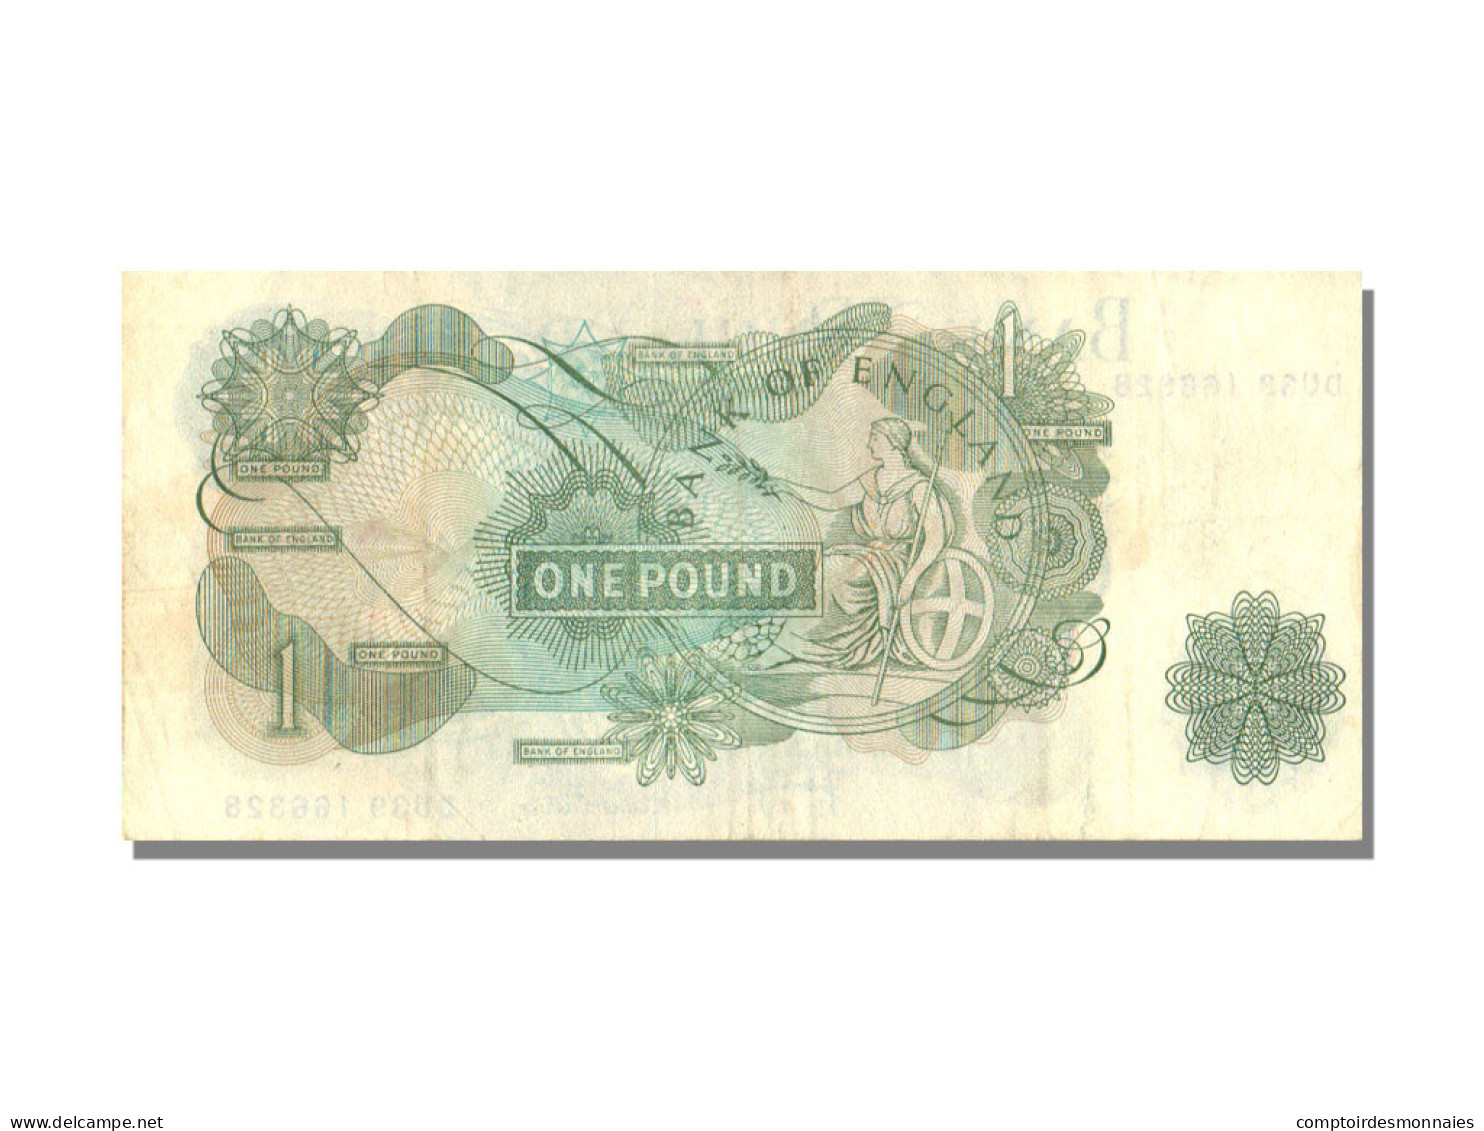 Billet, Grande-Bretagne, 1 Pound, KM:374g, SPL - 1 Pound